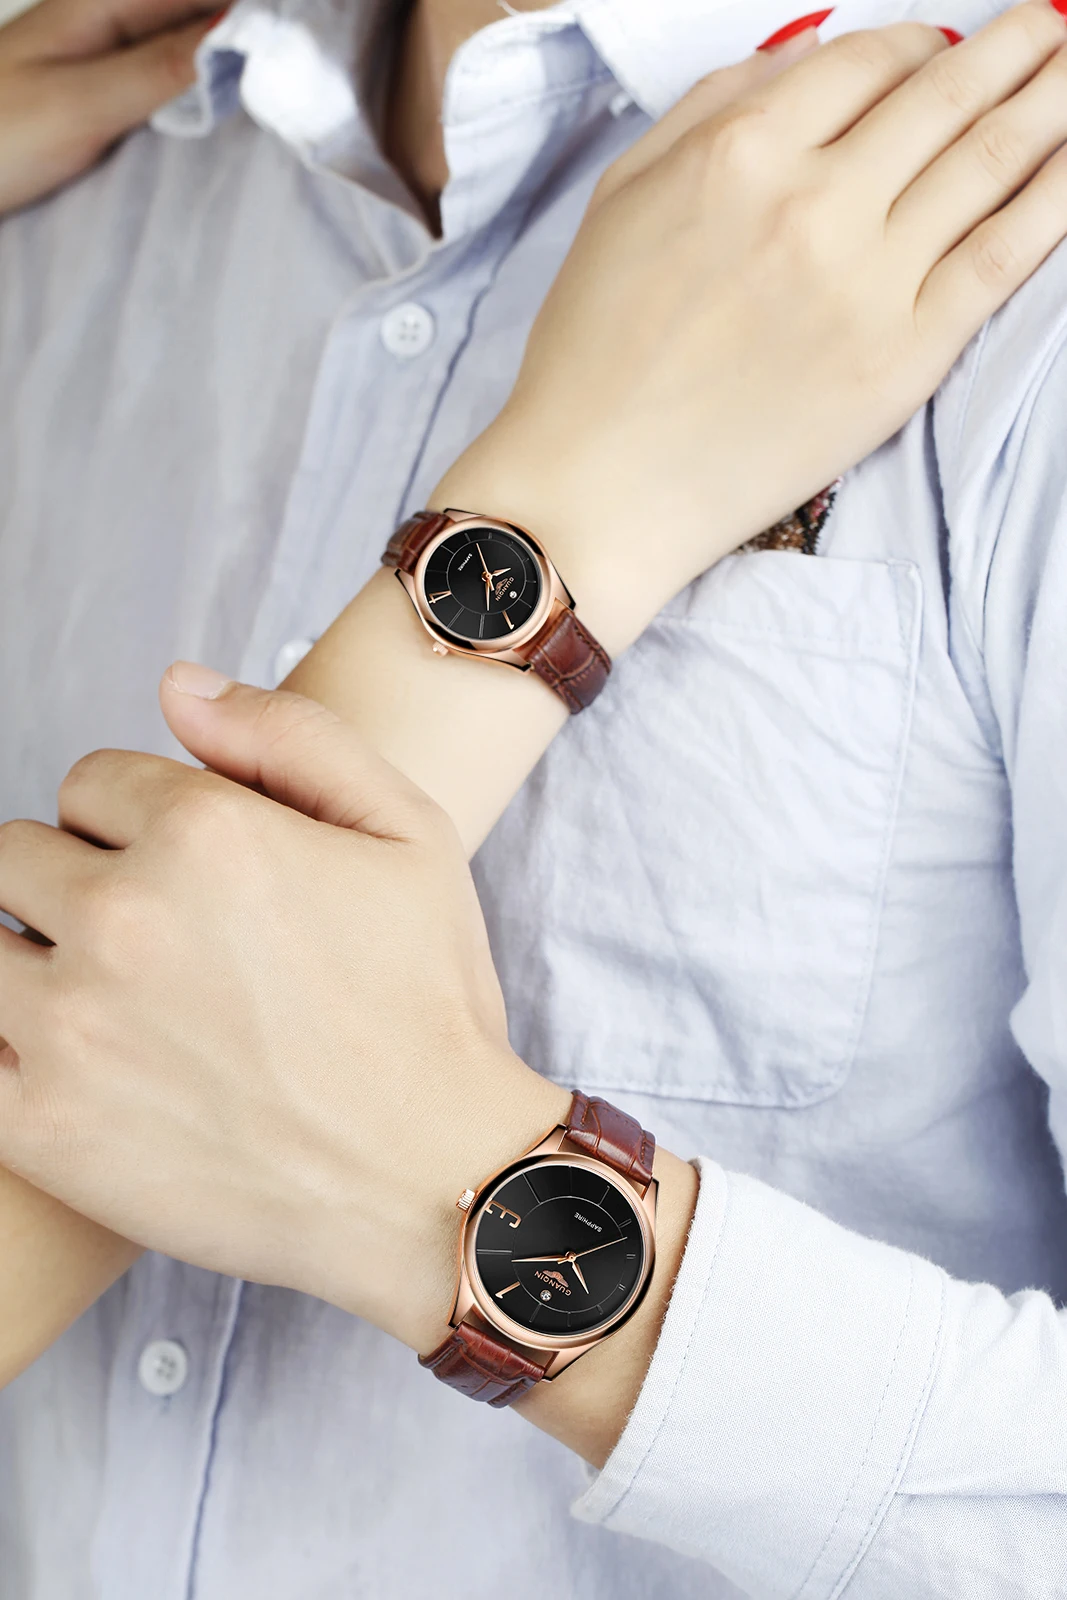 Reloj pareja GUANQIN розовое золото кварцевые часы Бизнес Мужские часы лучший бренд класса люкс Пара часы женские часы Relogio Feminino